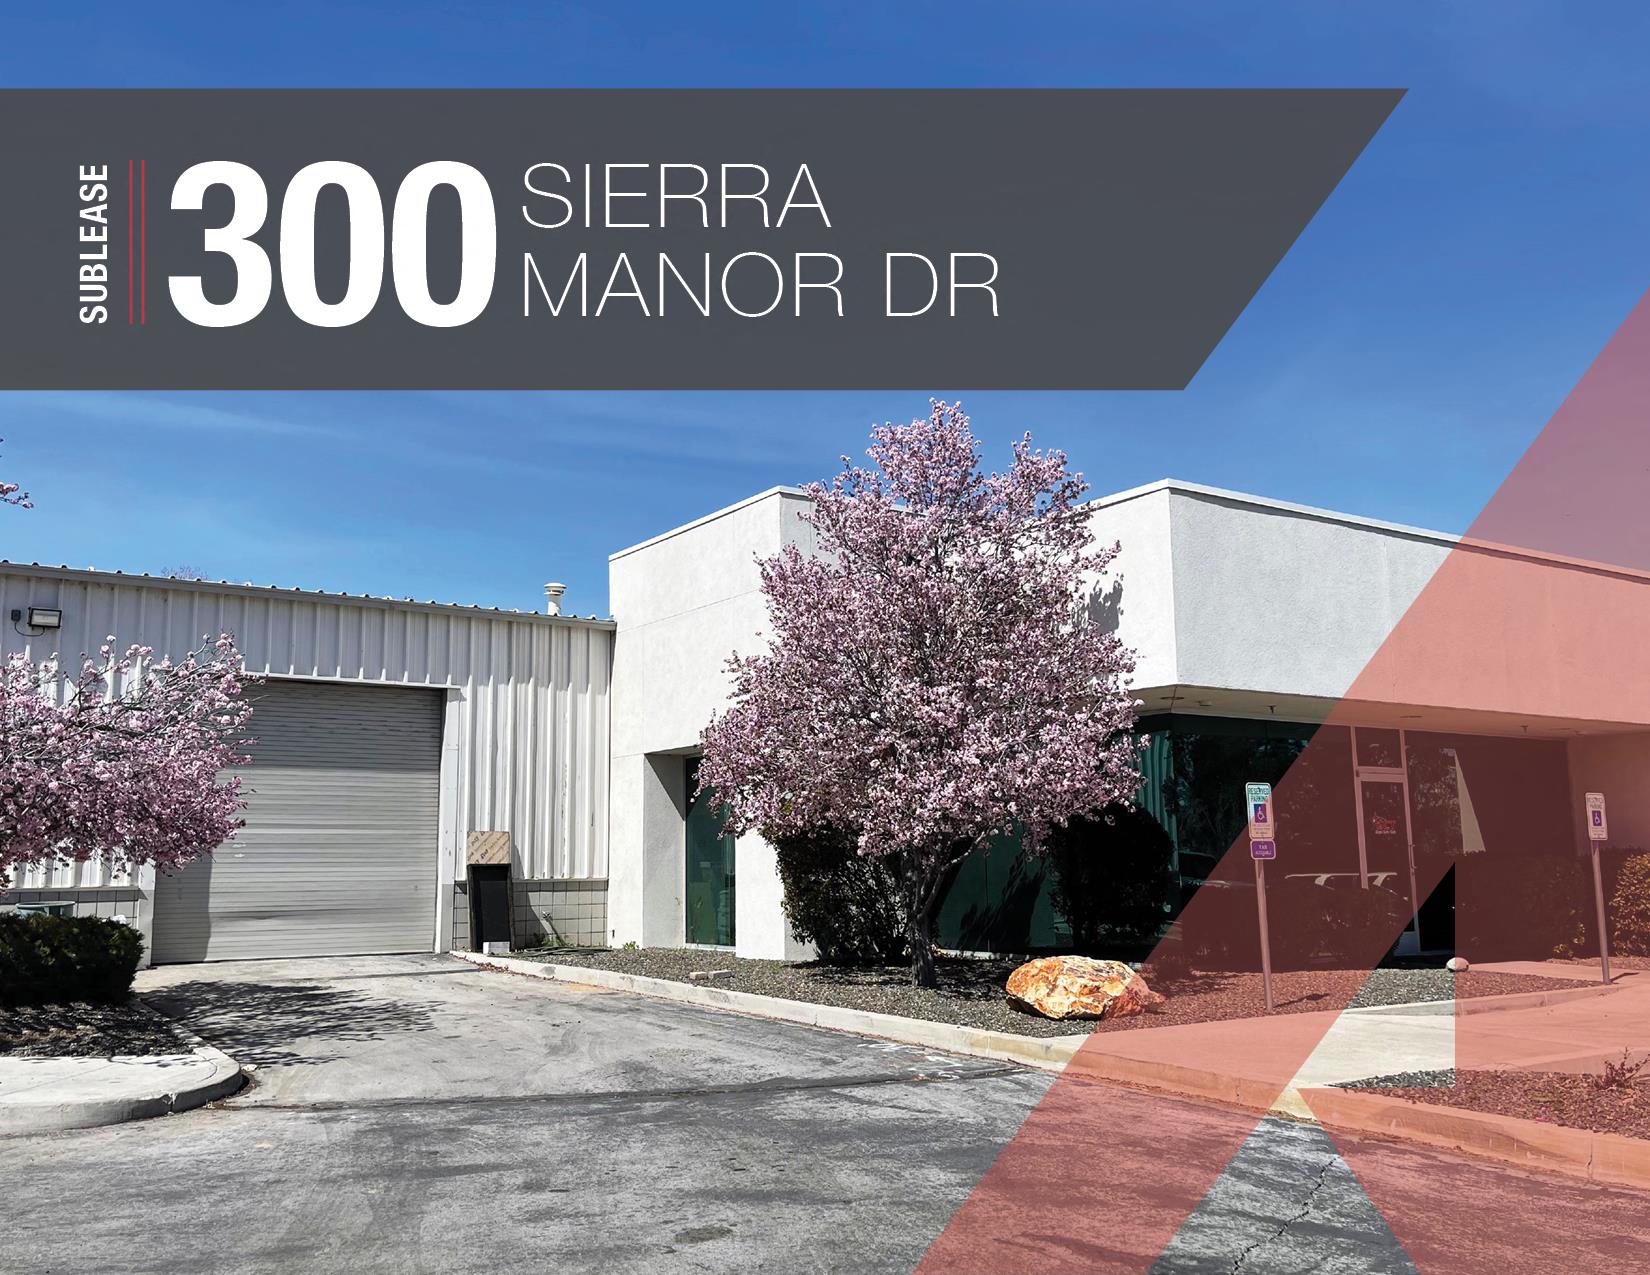 300 Sierra Manor Dr, Reno, NV 89511
